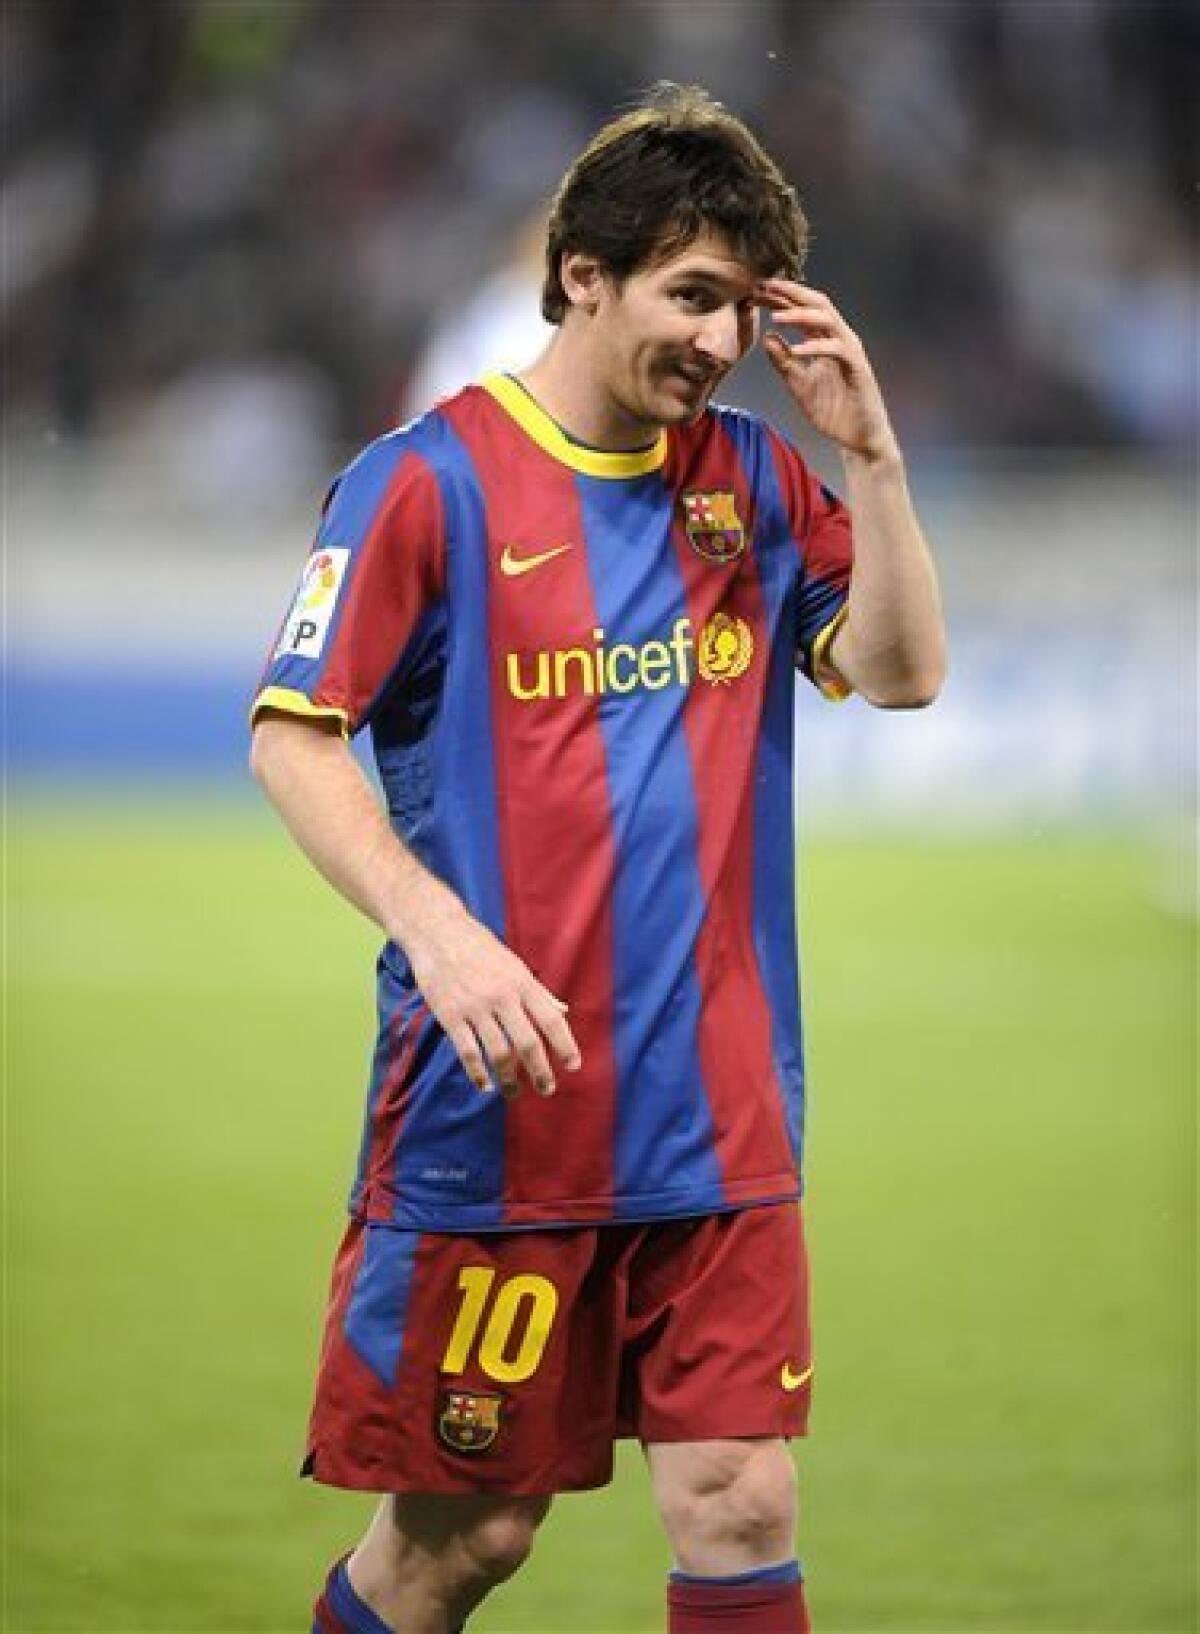 FC Barcelona News: 20 May 2011; Wembley Final Shirt Presented, De